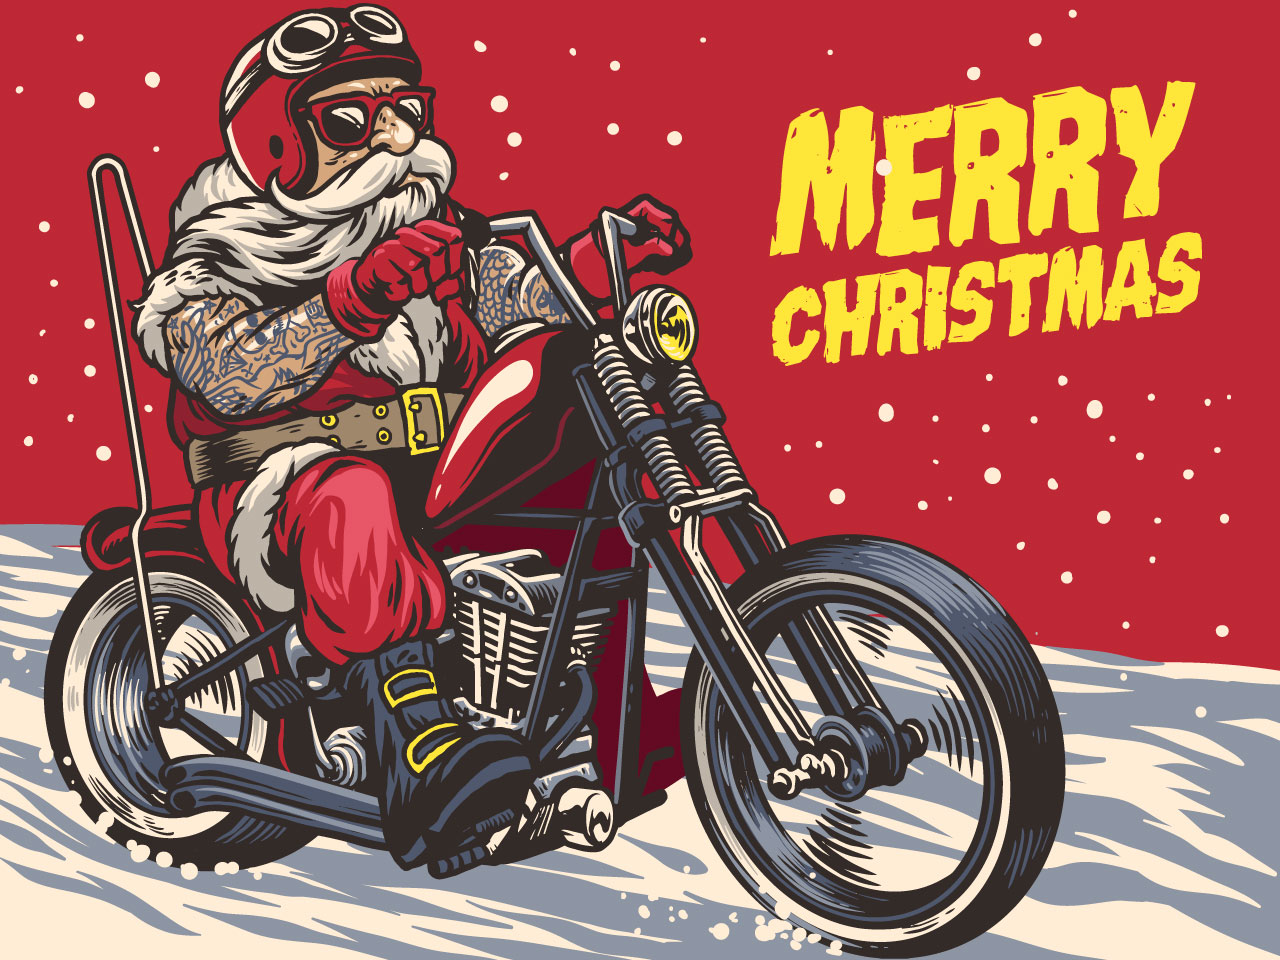 Hand drawn santa claus riding chopper motorcycle clipart image